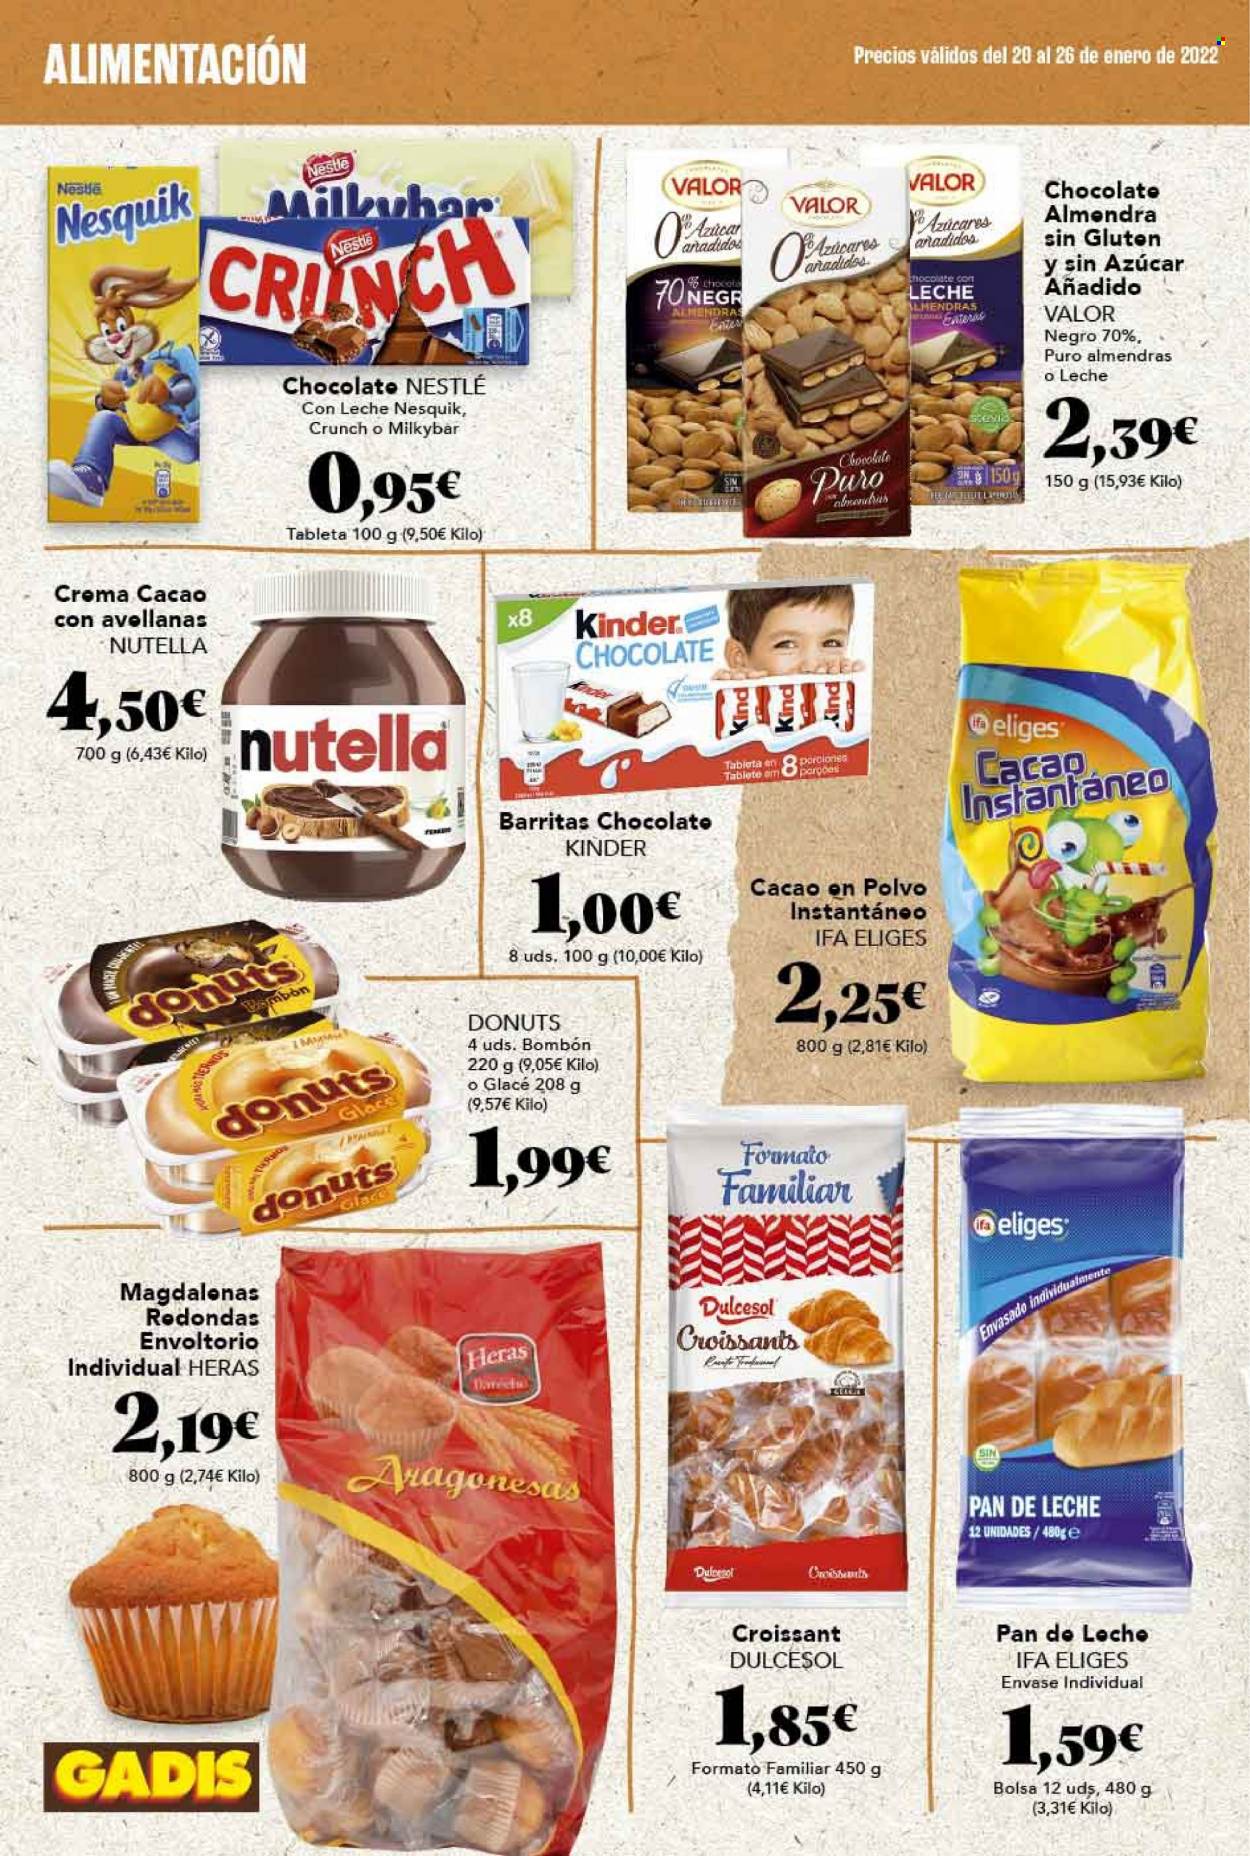 thumbnail - Folleto actual Gadis - 20/01/22 - 26/01/22 - Ventas - Dulcesol, pan, donut, croissant, magdalena, Kinder, chocolate, bombones, Nestlé, cacao, Nesquik, Nutella. Página 20.